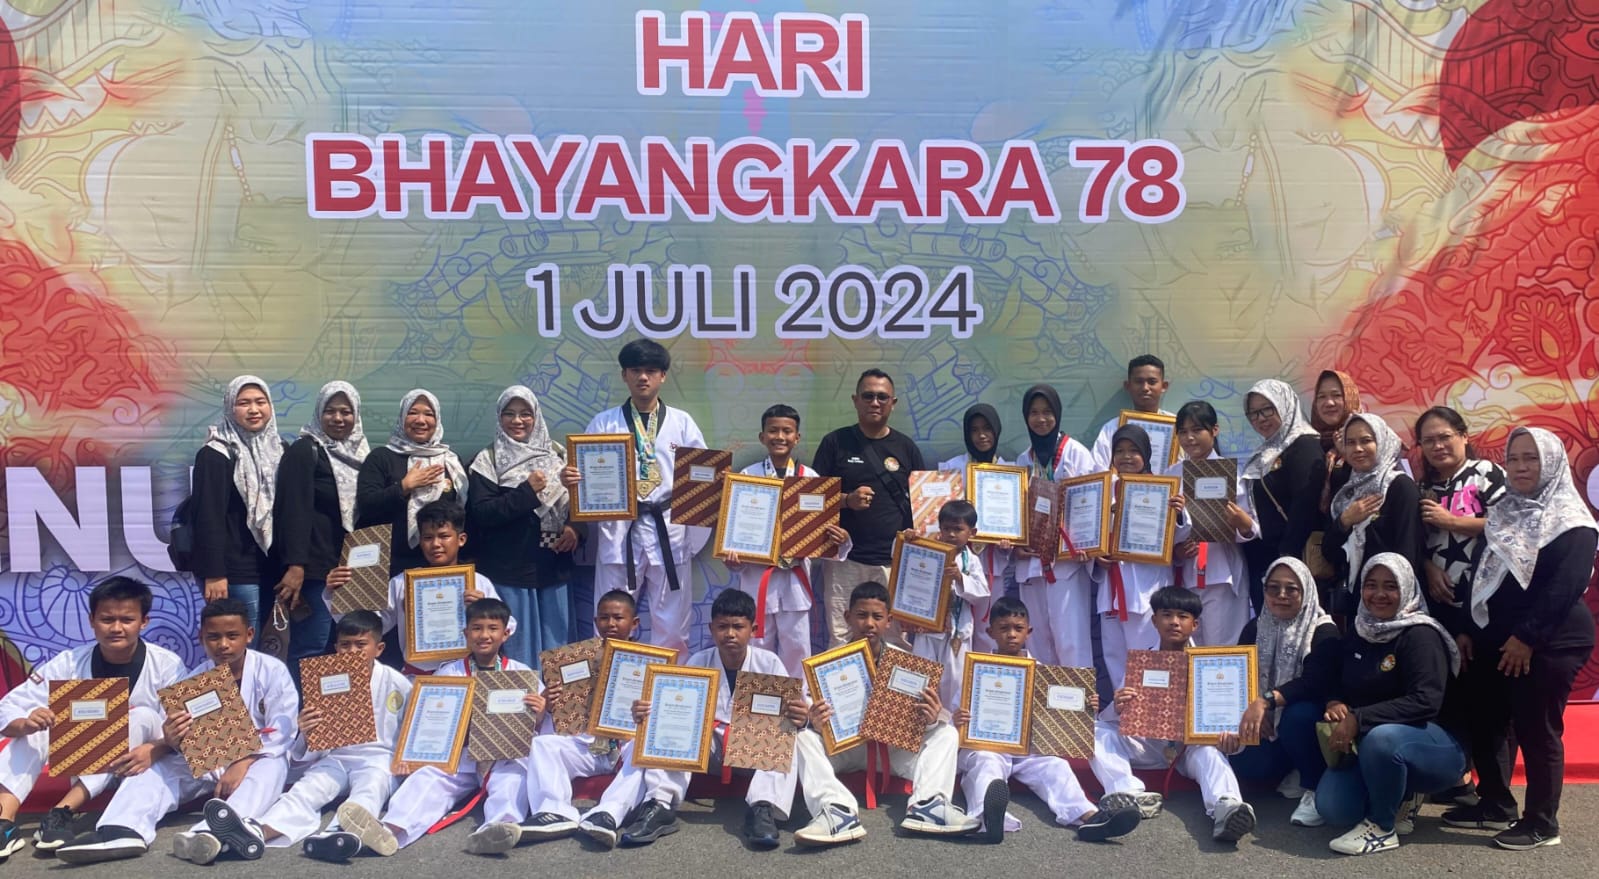 Harumkan Polda Lampung Bidang Taekwondo, Polsek Natar Terima Penghargaan dari Kapolda 